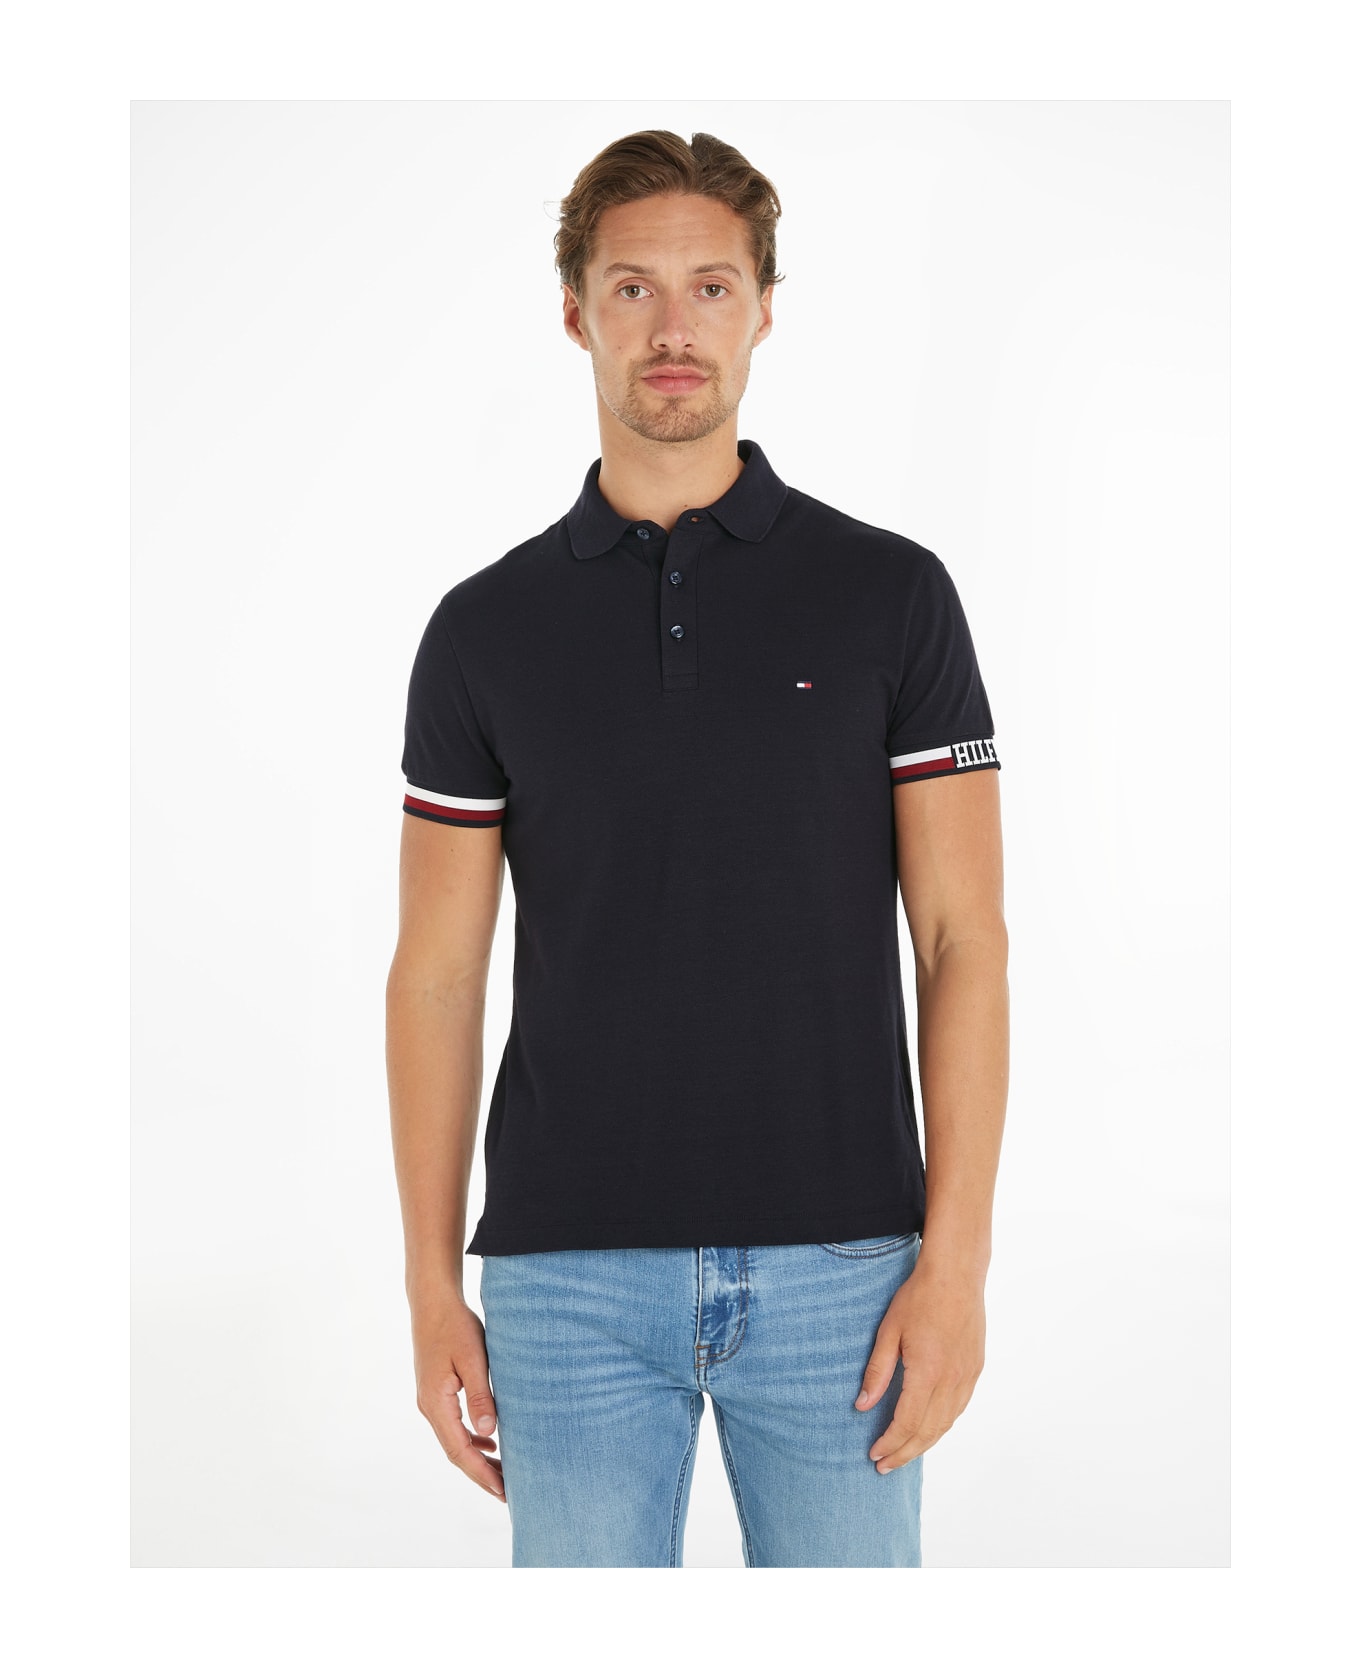 Tommy Hilfiger Navy Blue Short-sleeved Polo Shirt - DESERT SKY ポロシャツ